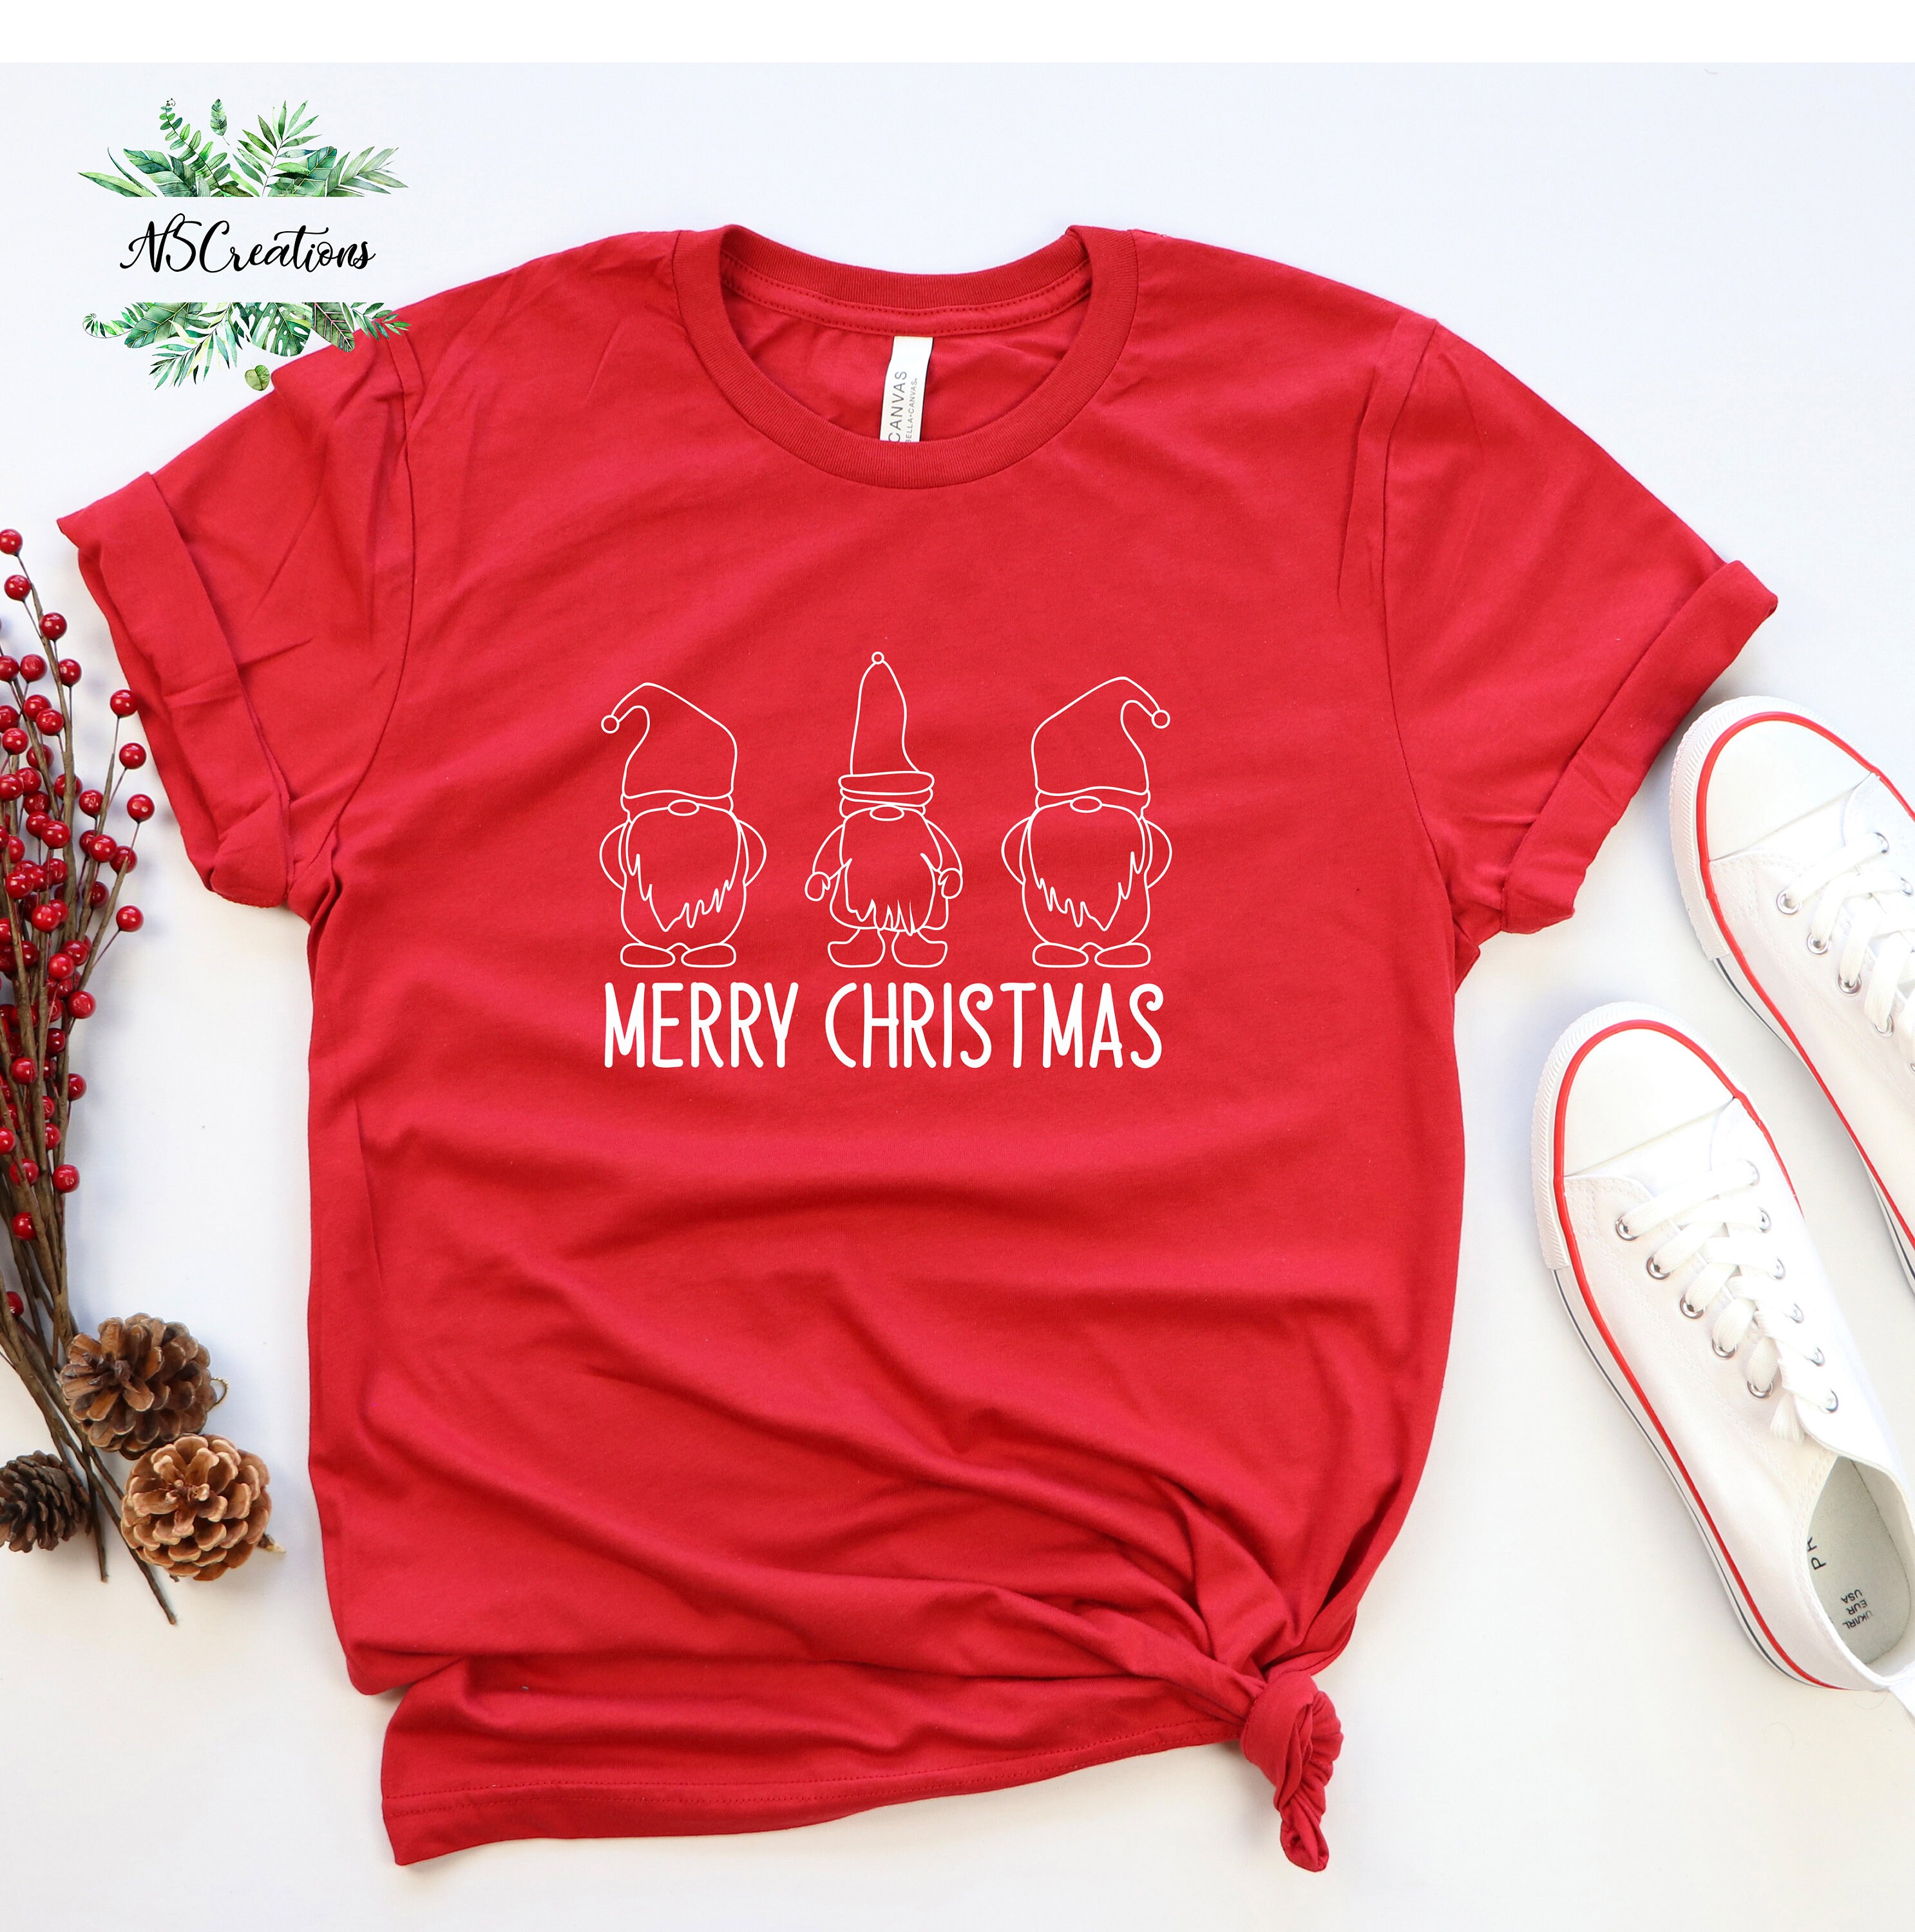 13 Christmas Shirt Ideas